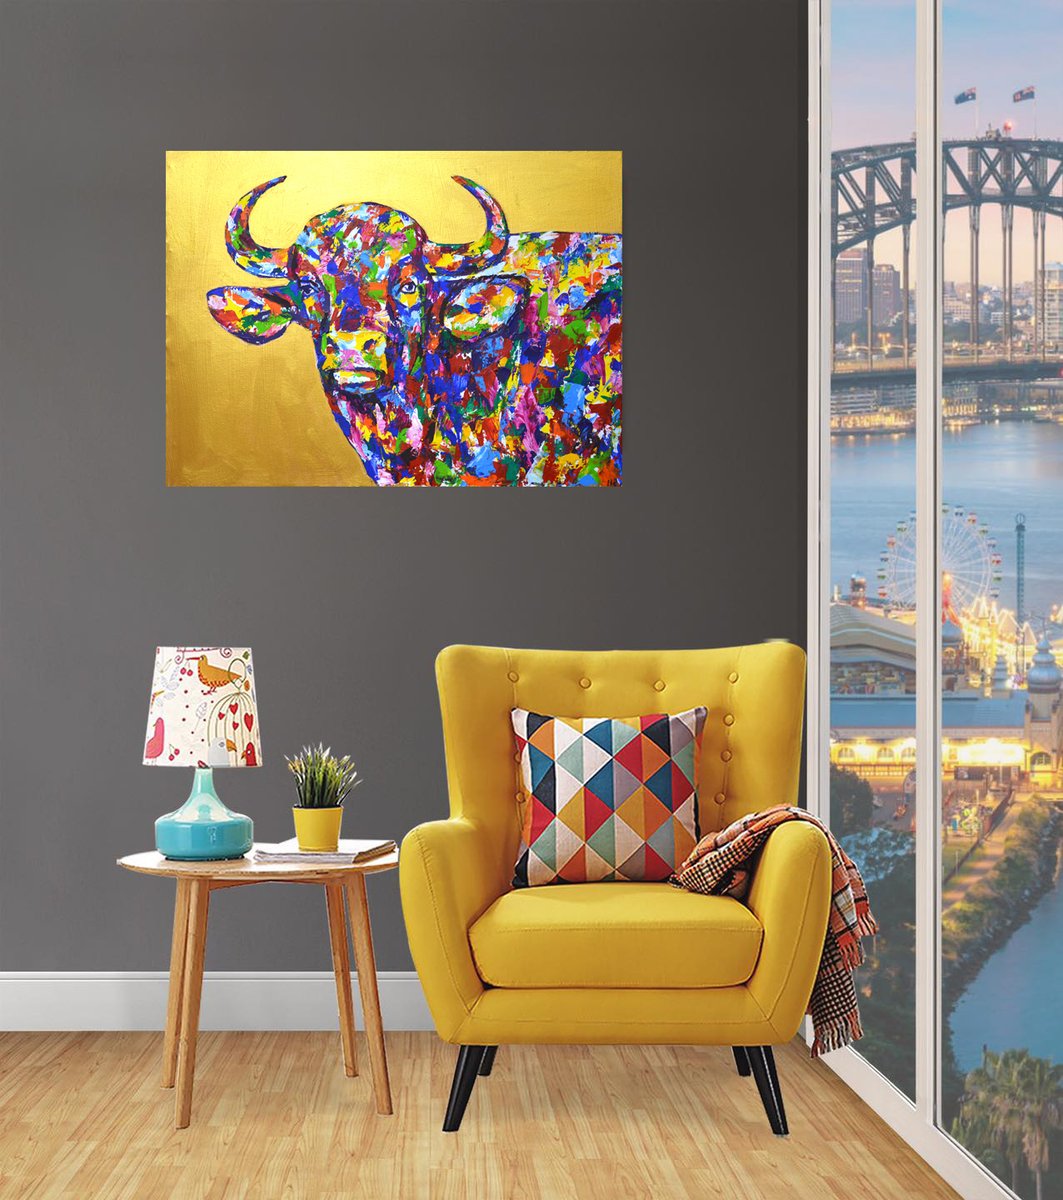 singulart.com/.../iryna-kast…...
Acrylic on canvas
60х80 cm
#bull #gold #animal #Modern #America #Singulartinaction #singulartofficial #conteporaryart #wesingulart #painting #expressionism #1stdibs #ArtVoyagegallery #Artsper #Artsy  #artmajeur #abstractionism #art #london #uk